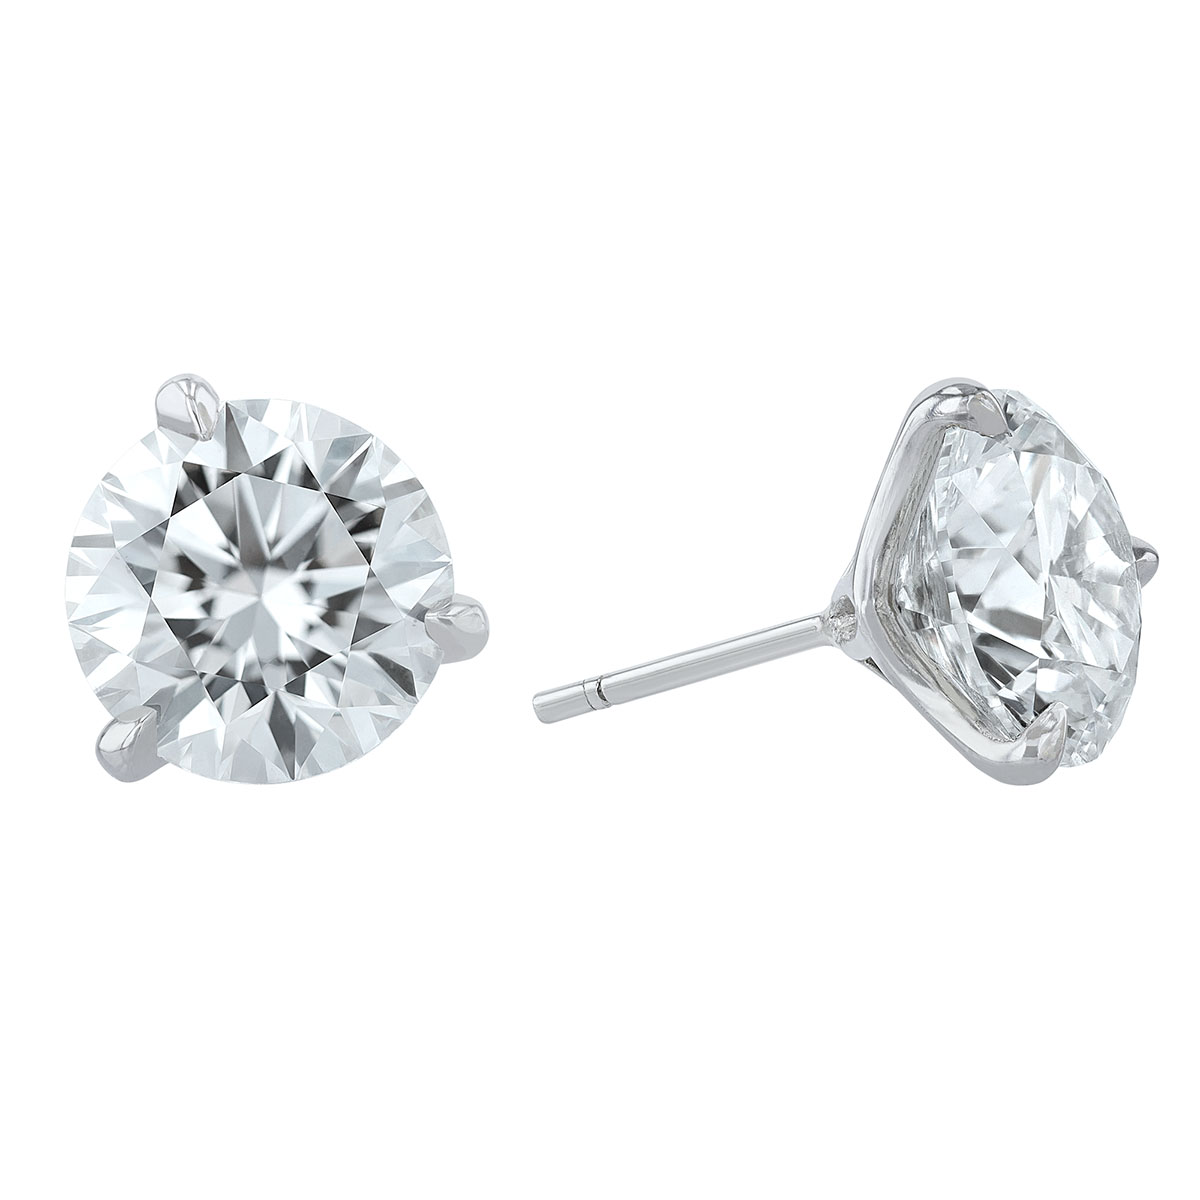 Rahaminov Round Diamond Stud Earrings in Platinum, 6.03 cttw | Borsheims